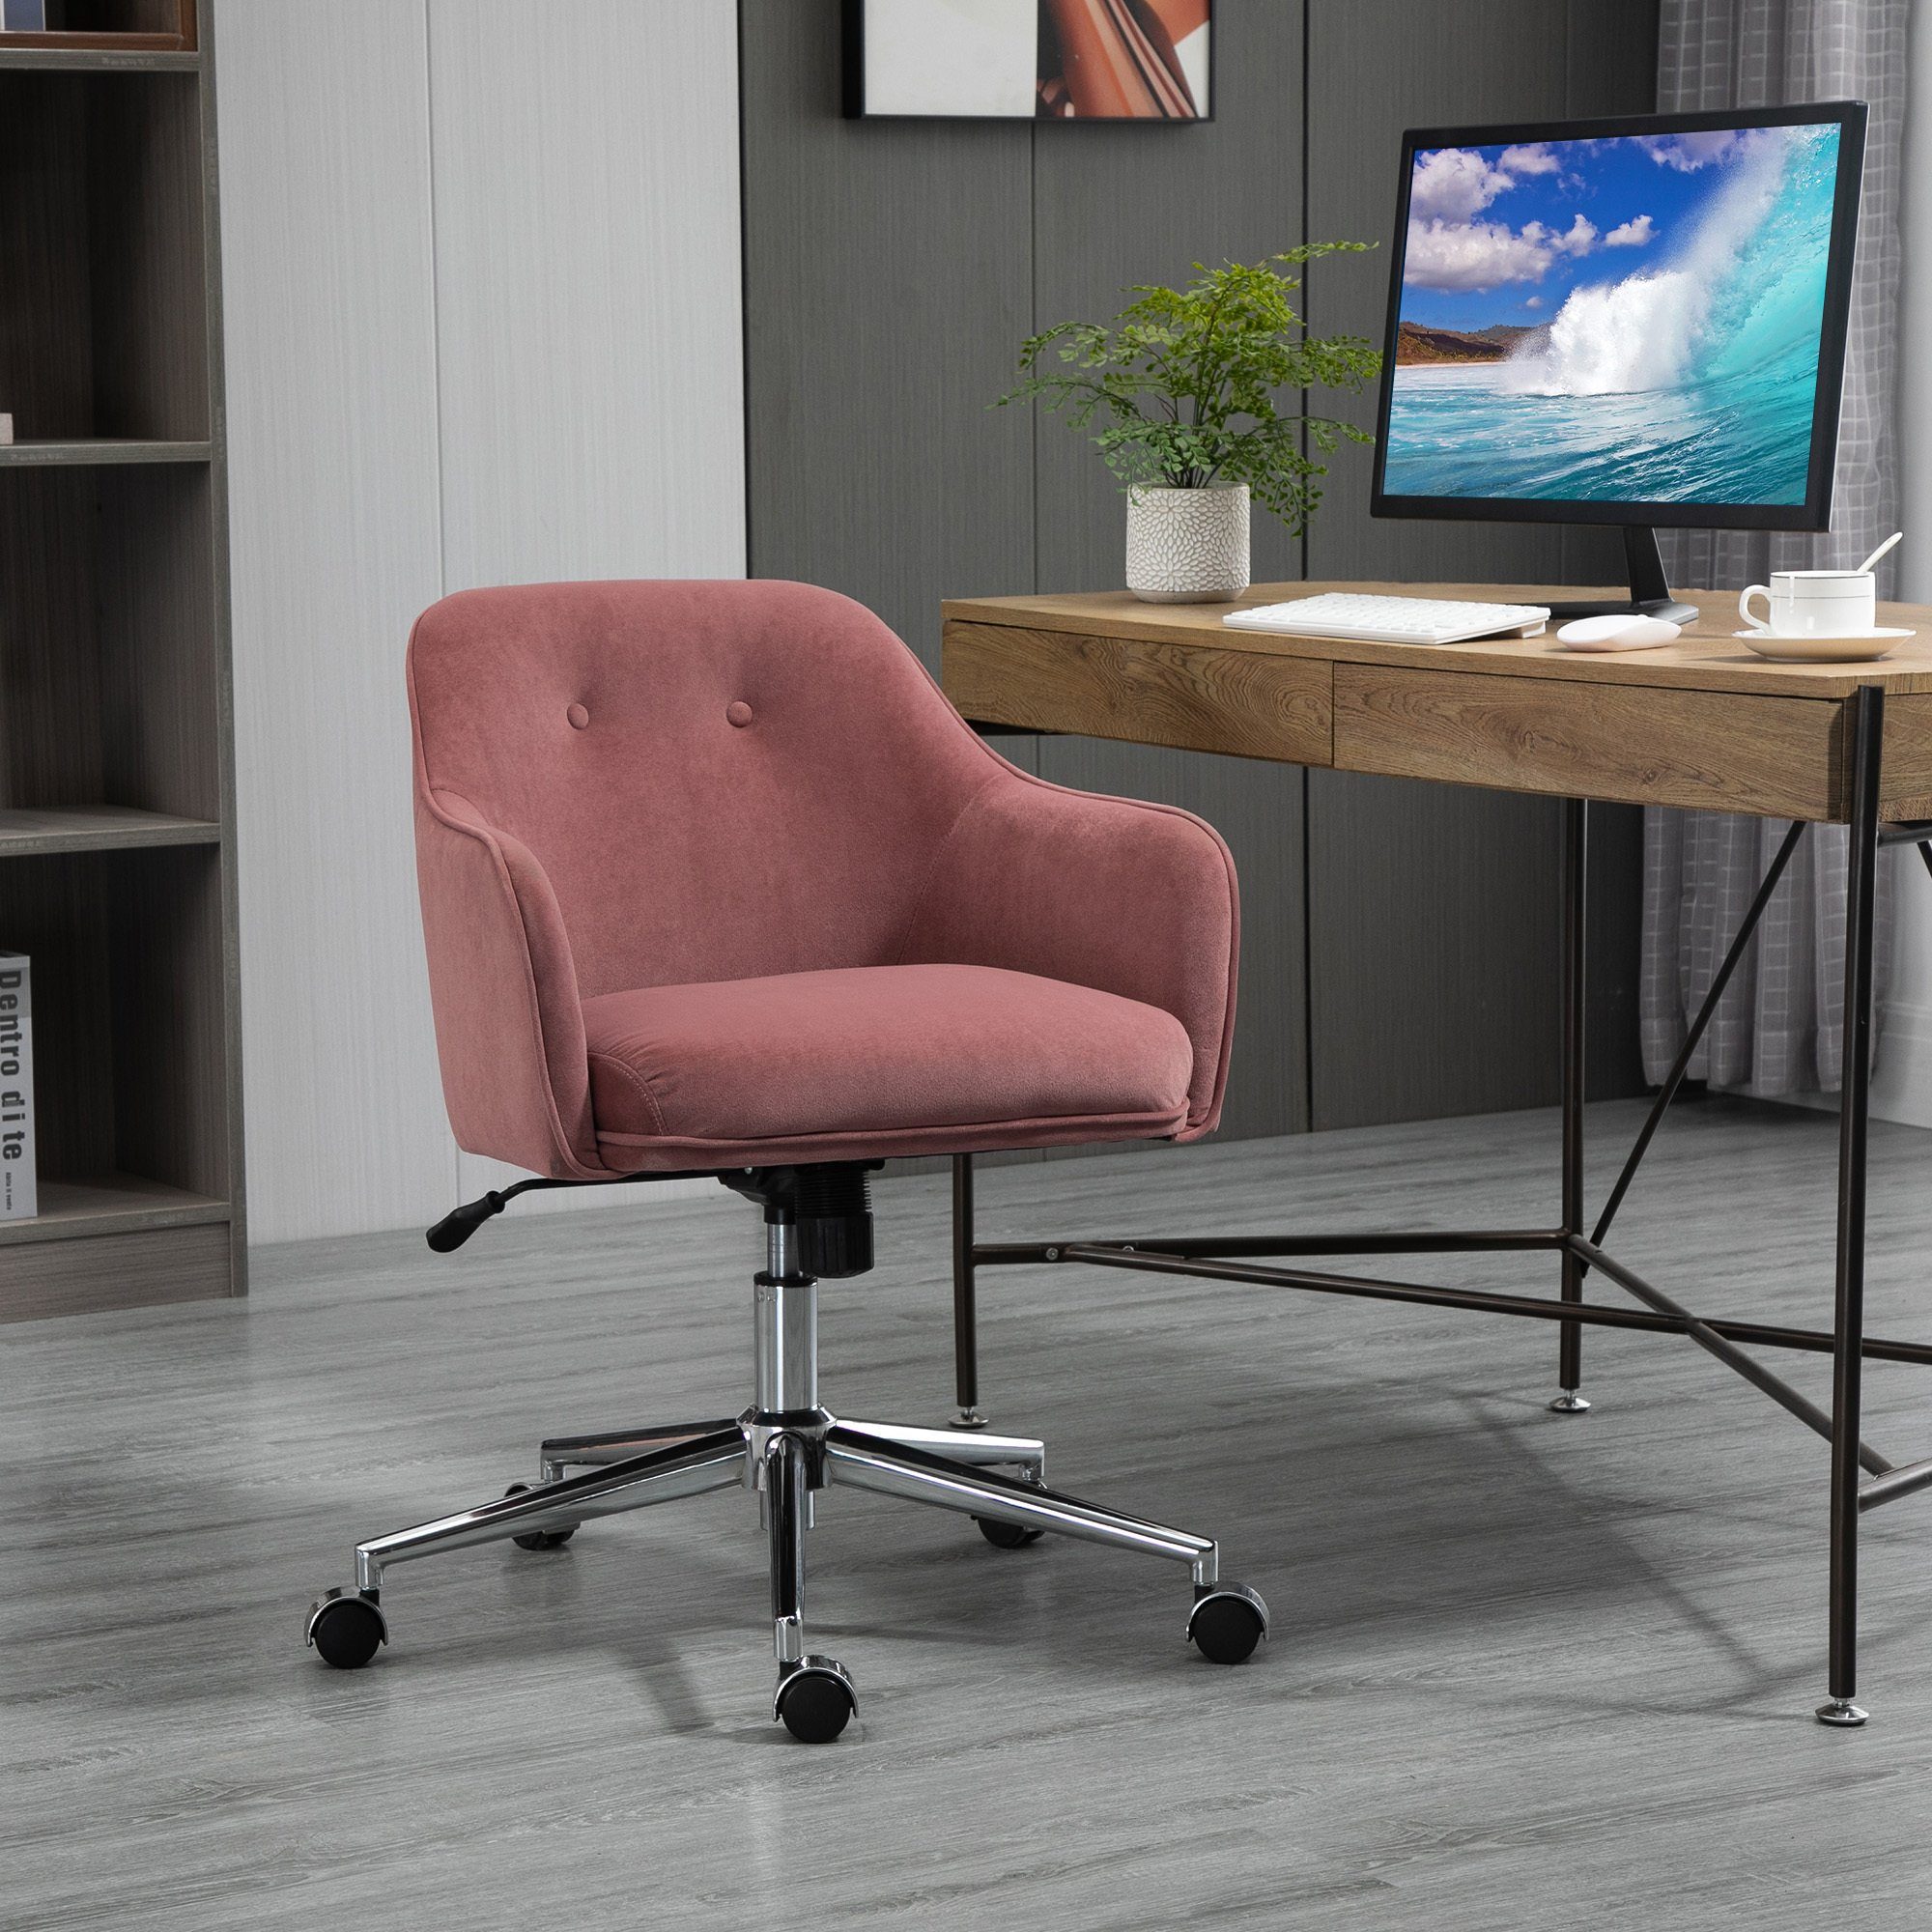 Vinsetto Schreibtischstuhl Bürostuhl rot ergonomisch | geformt, gaslift high-end rot